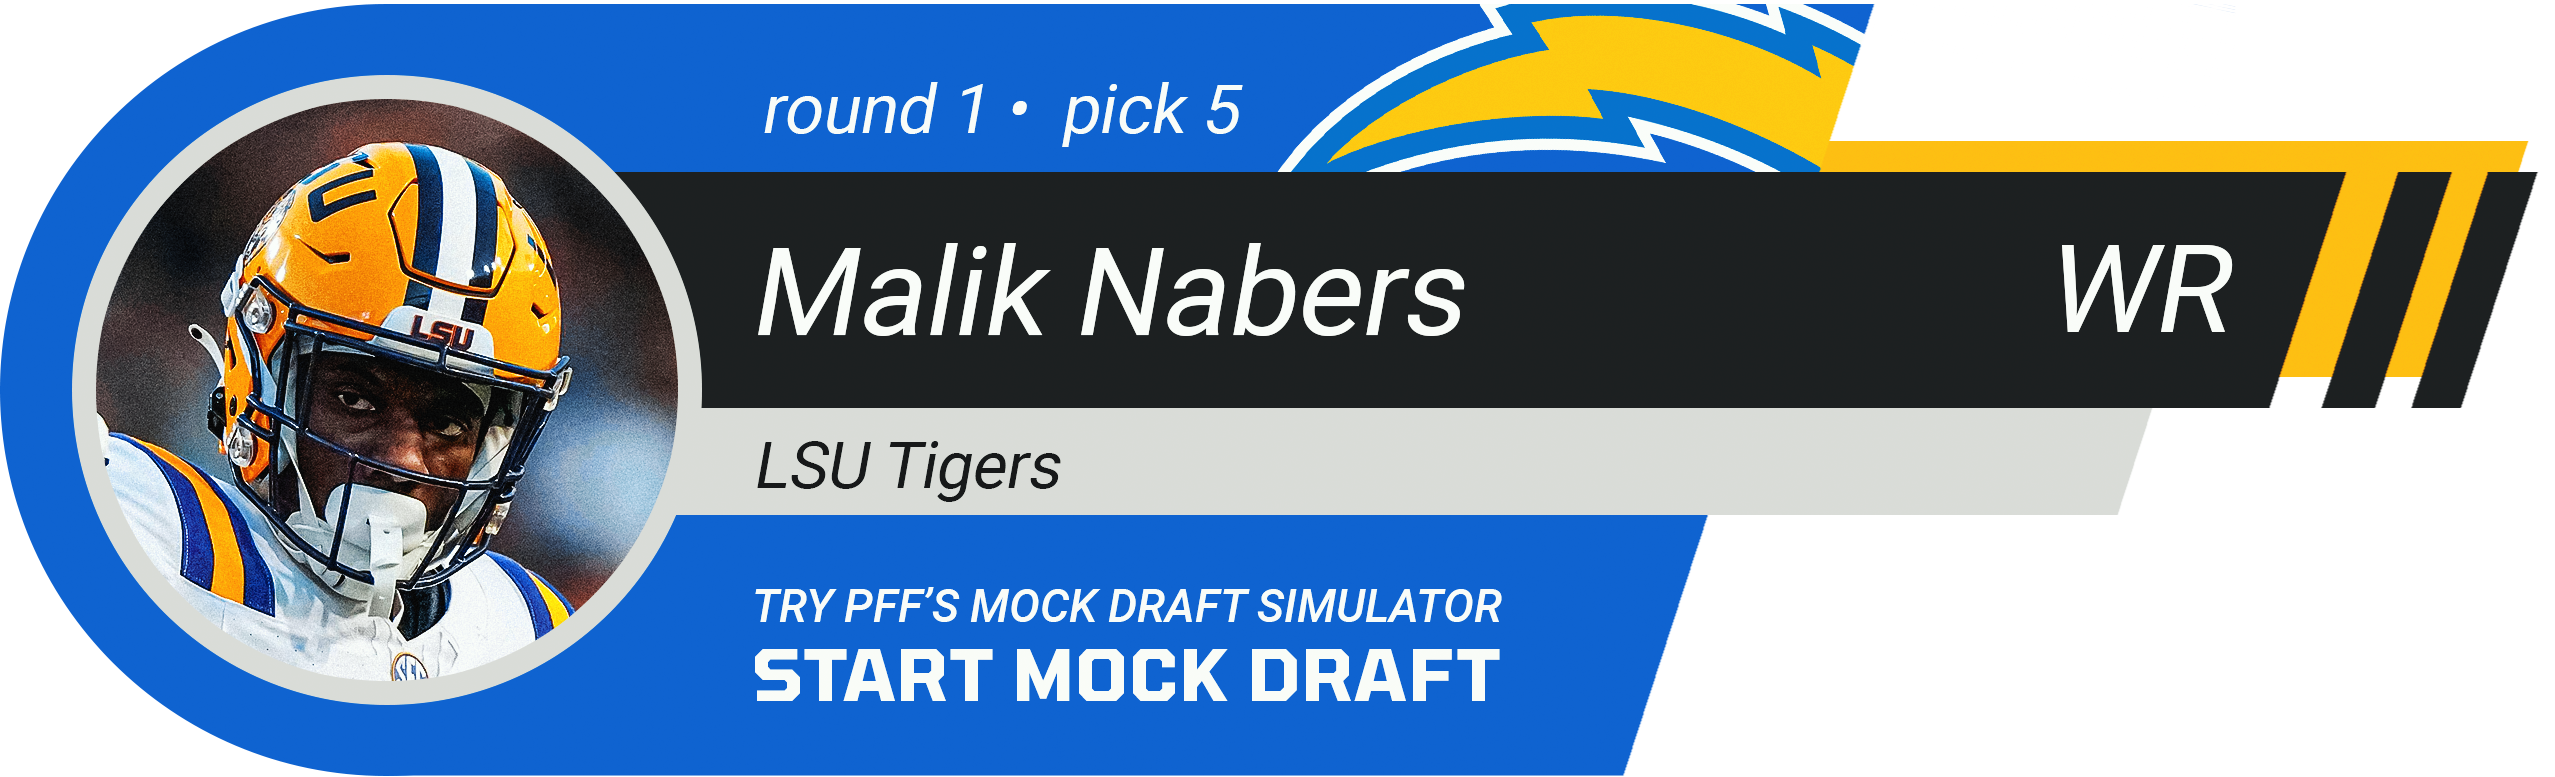 Los Angeles Chargers: Malik Nabers, WR, LSU